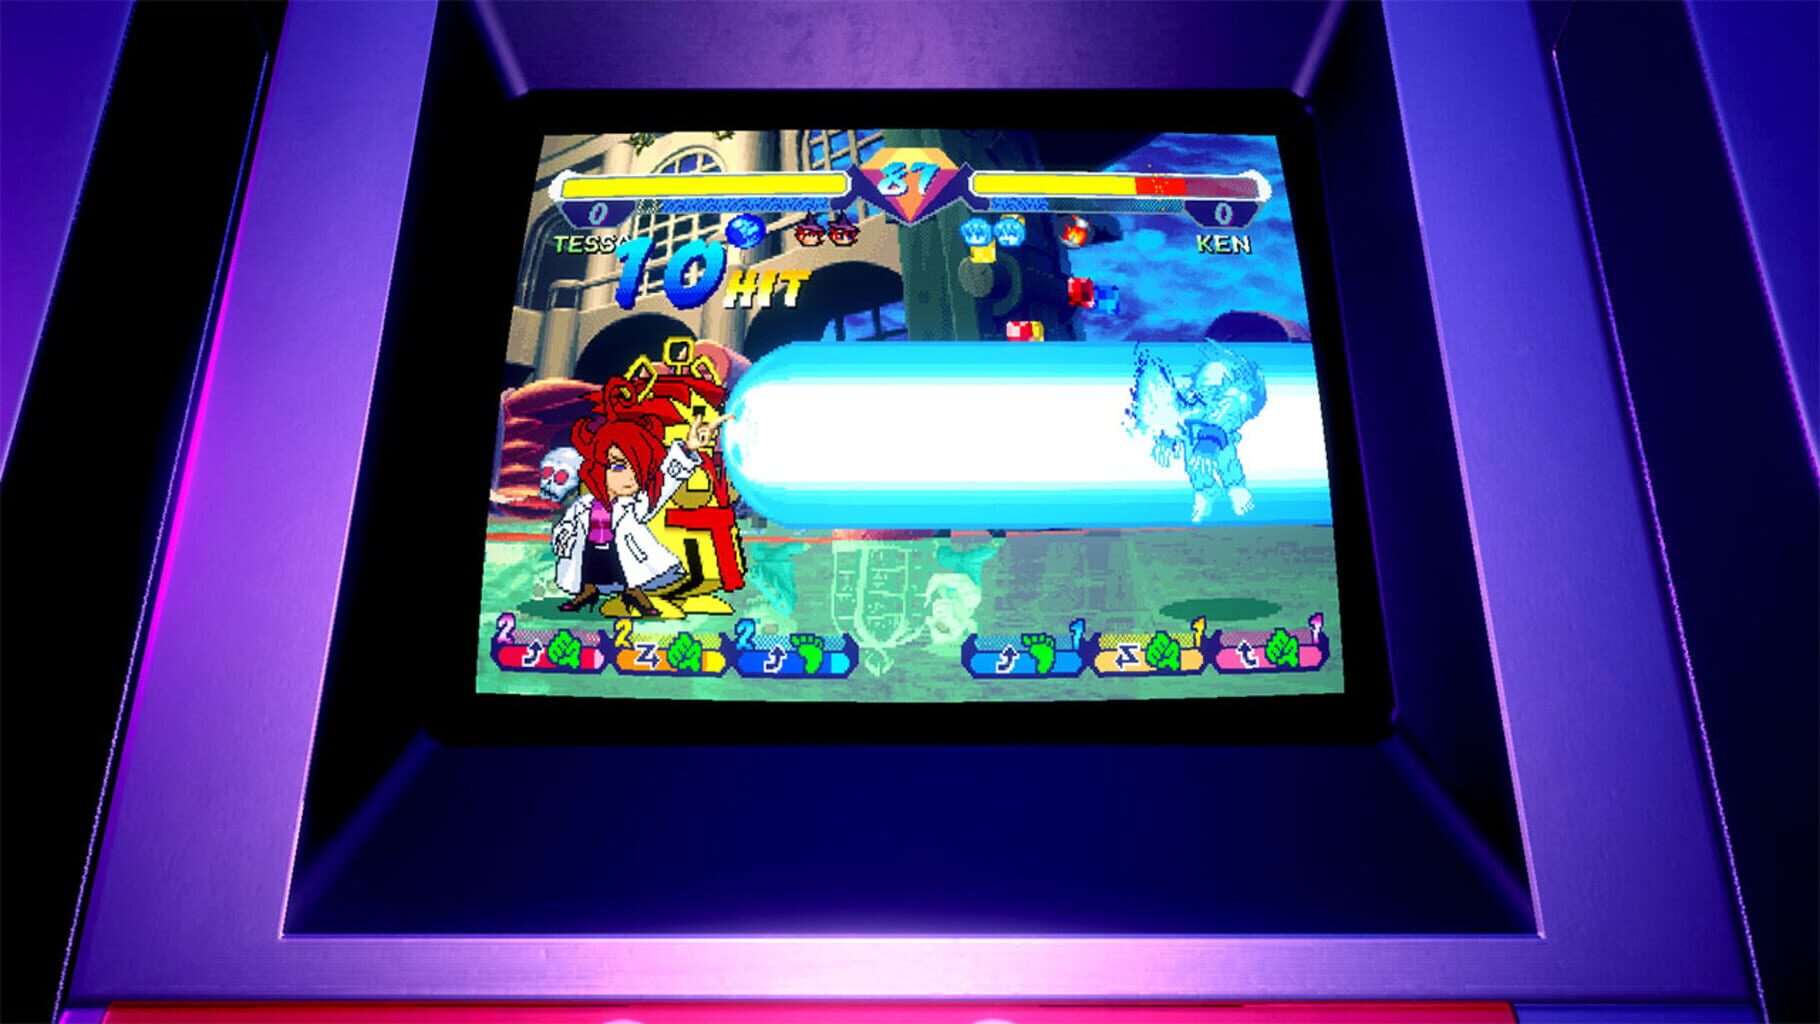 Capcom Arcade 2nd Stadium: Super Gem Fighter Mini Mix screenshot